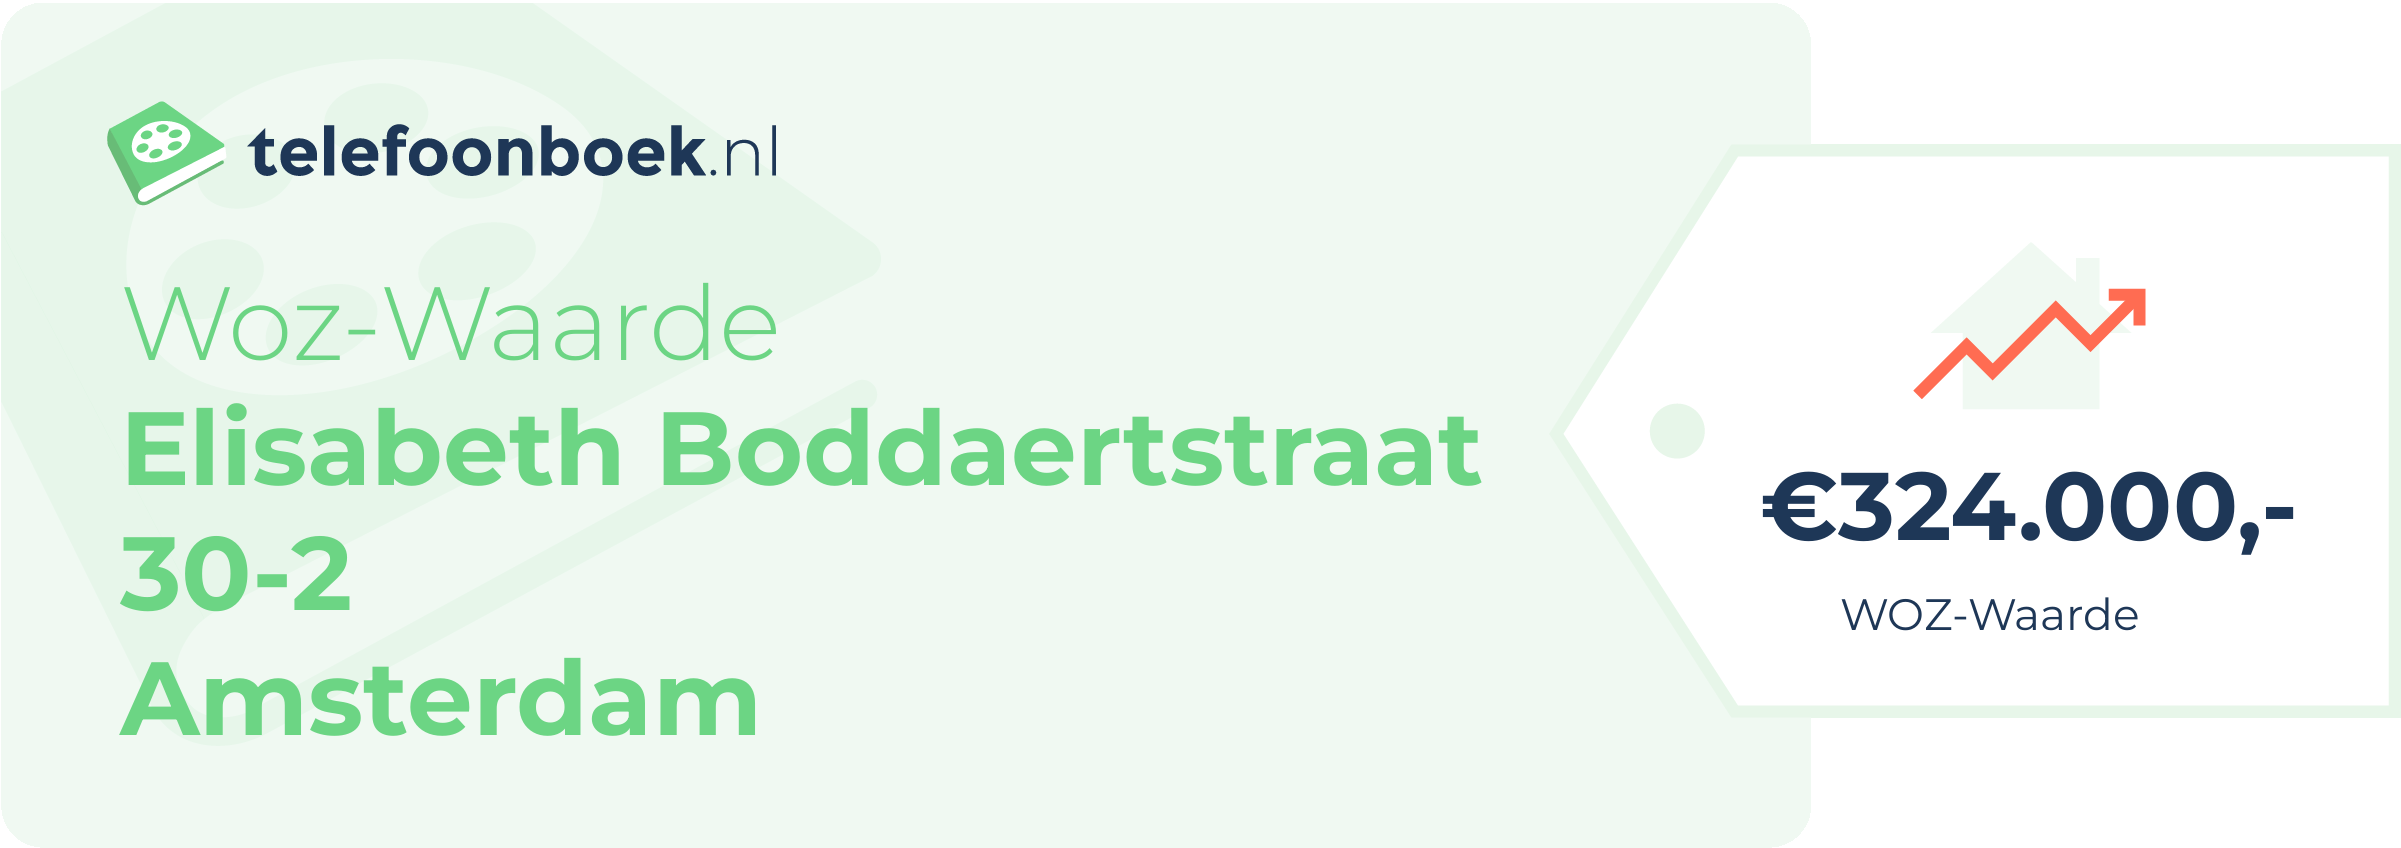 WOZ-waarde Elisabeth Boddaertstraat 30-2 Amsterdam